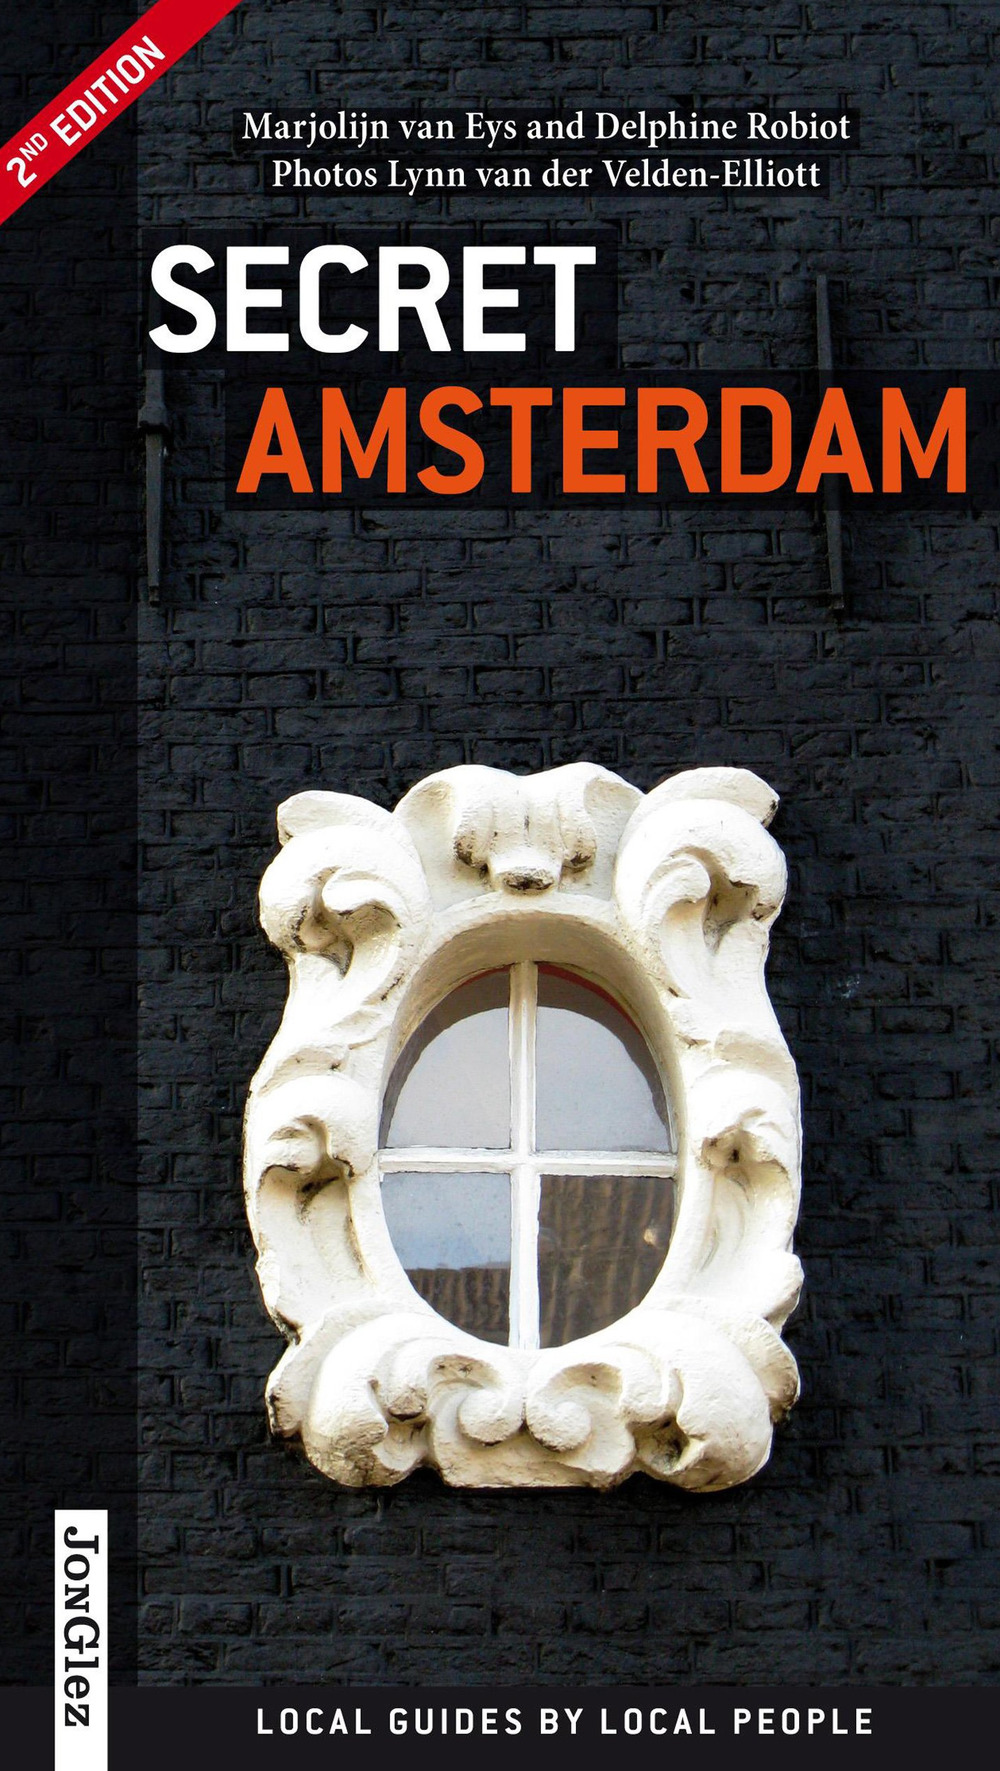 Secret Amsterdam